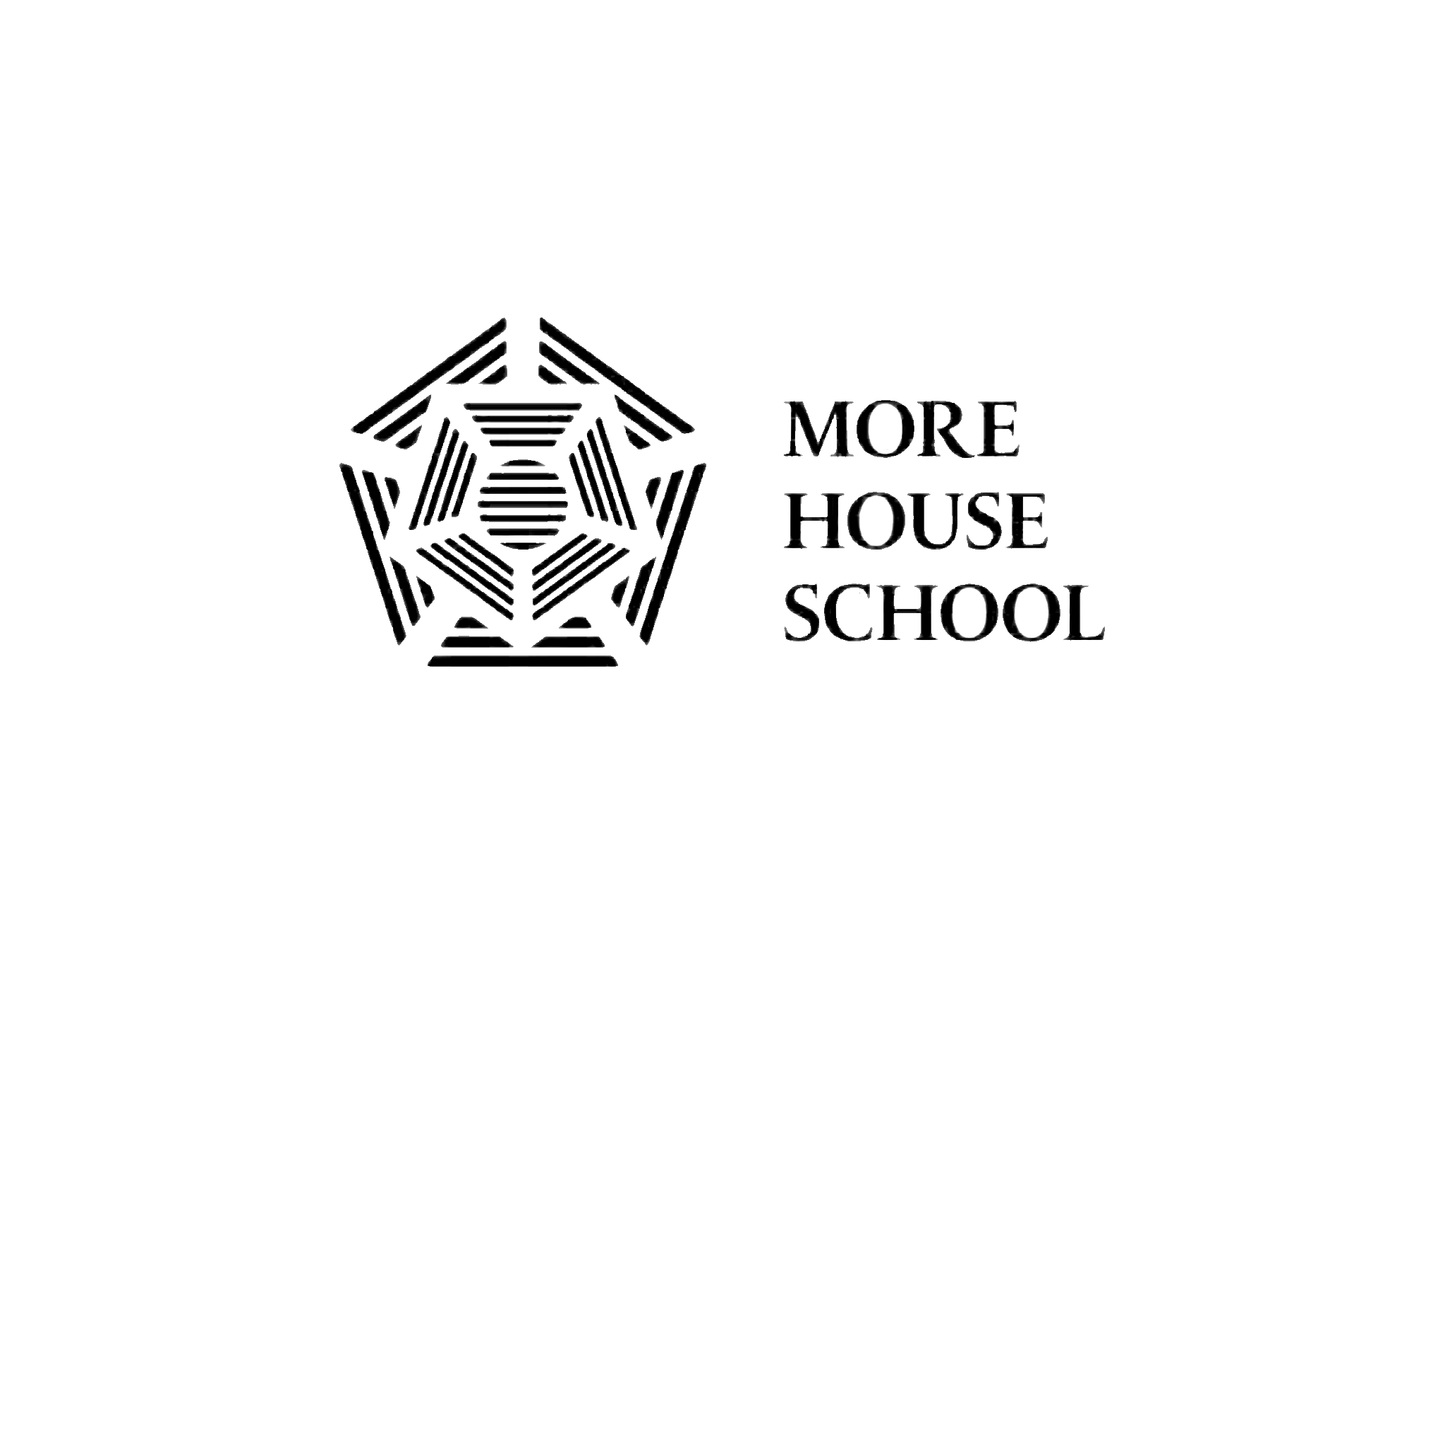 More House School: 11+ Maths (2013) 